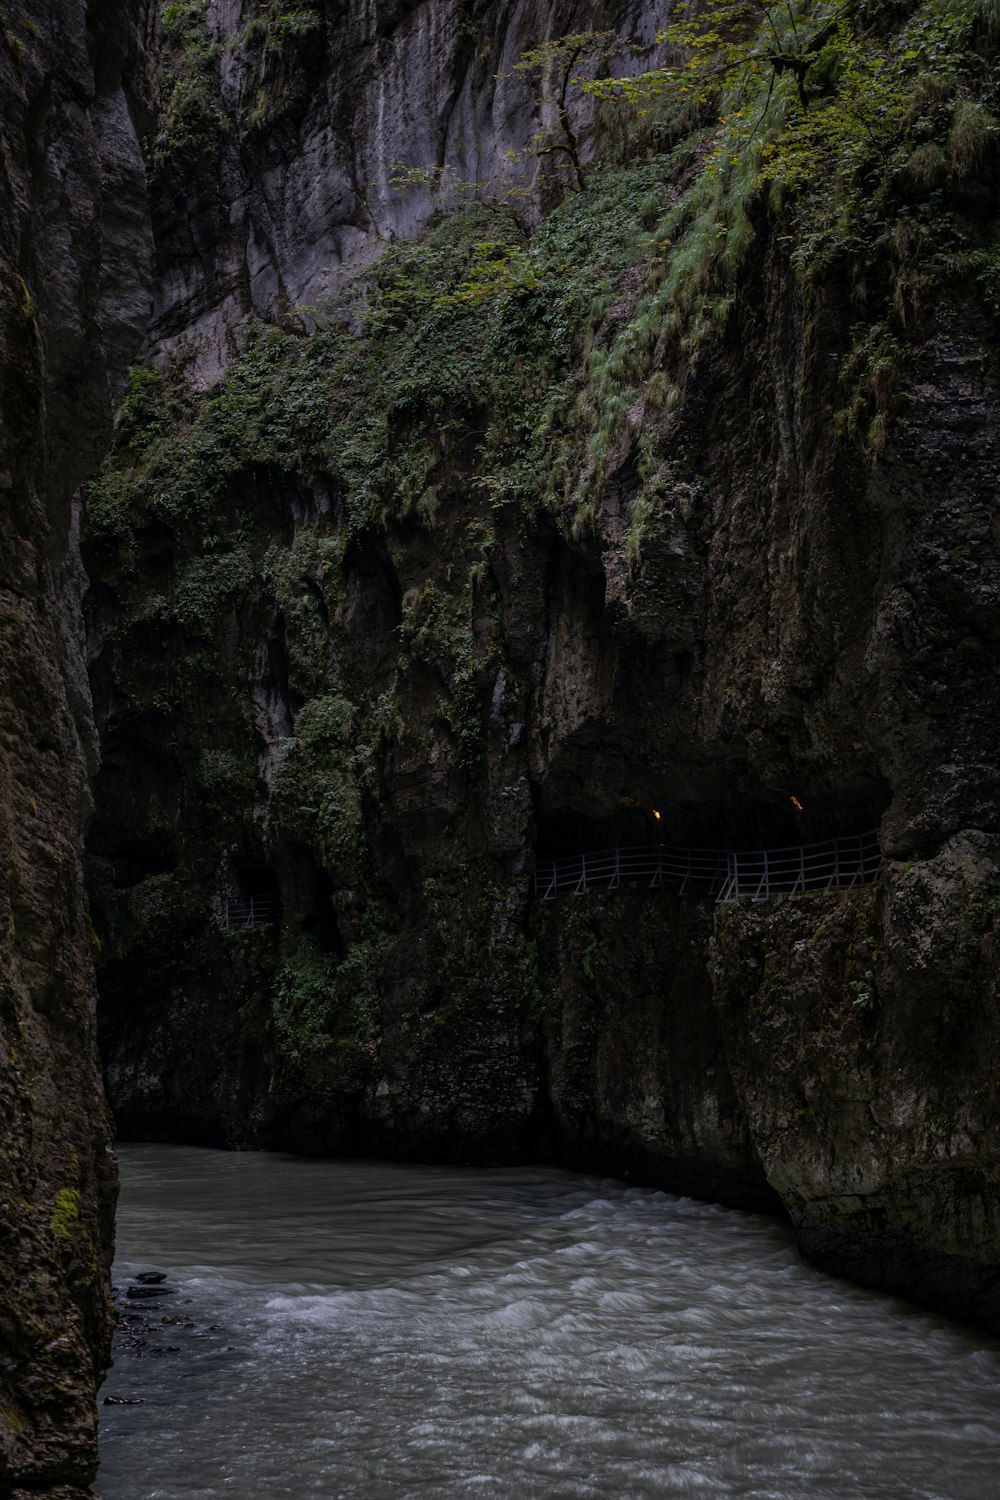 a river flowing through a lush green canyon